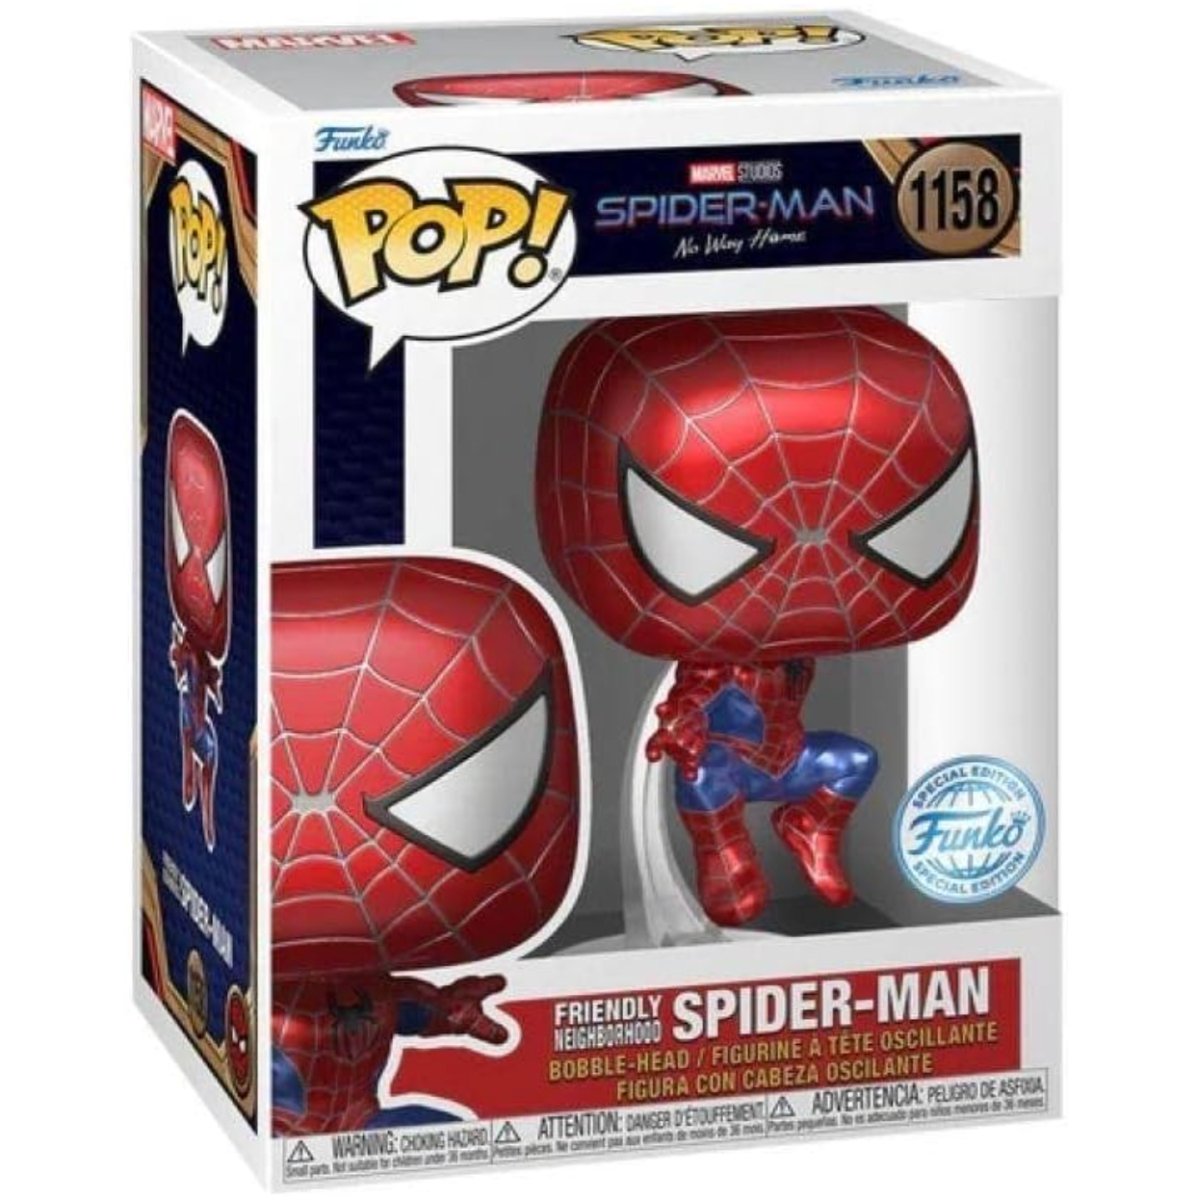 Spider-Man No Way Home - Friendly Neighborhood Spider-Man [Leaping] (Metallic Special Edition) #1158 - Funko Pop! Vinyl Marvel - Persona Toys